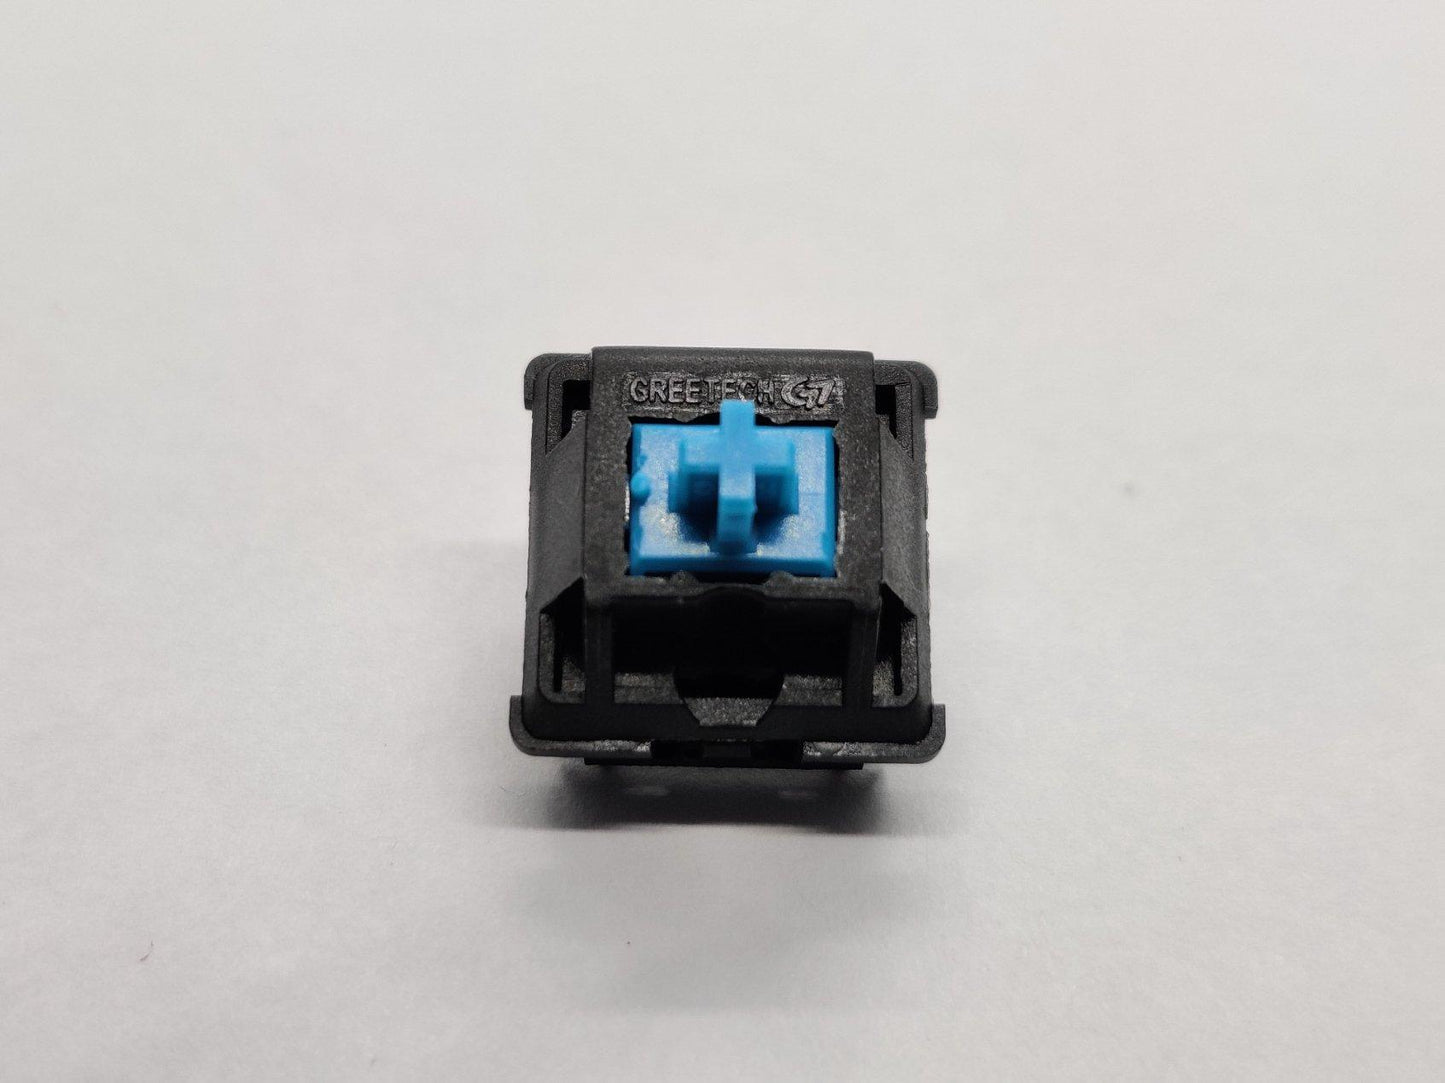 Greetech Blue - Black Housing - Through Hole - 3 pin